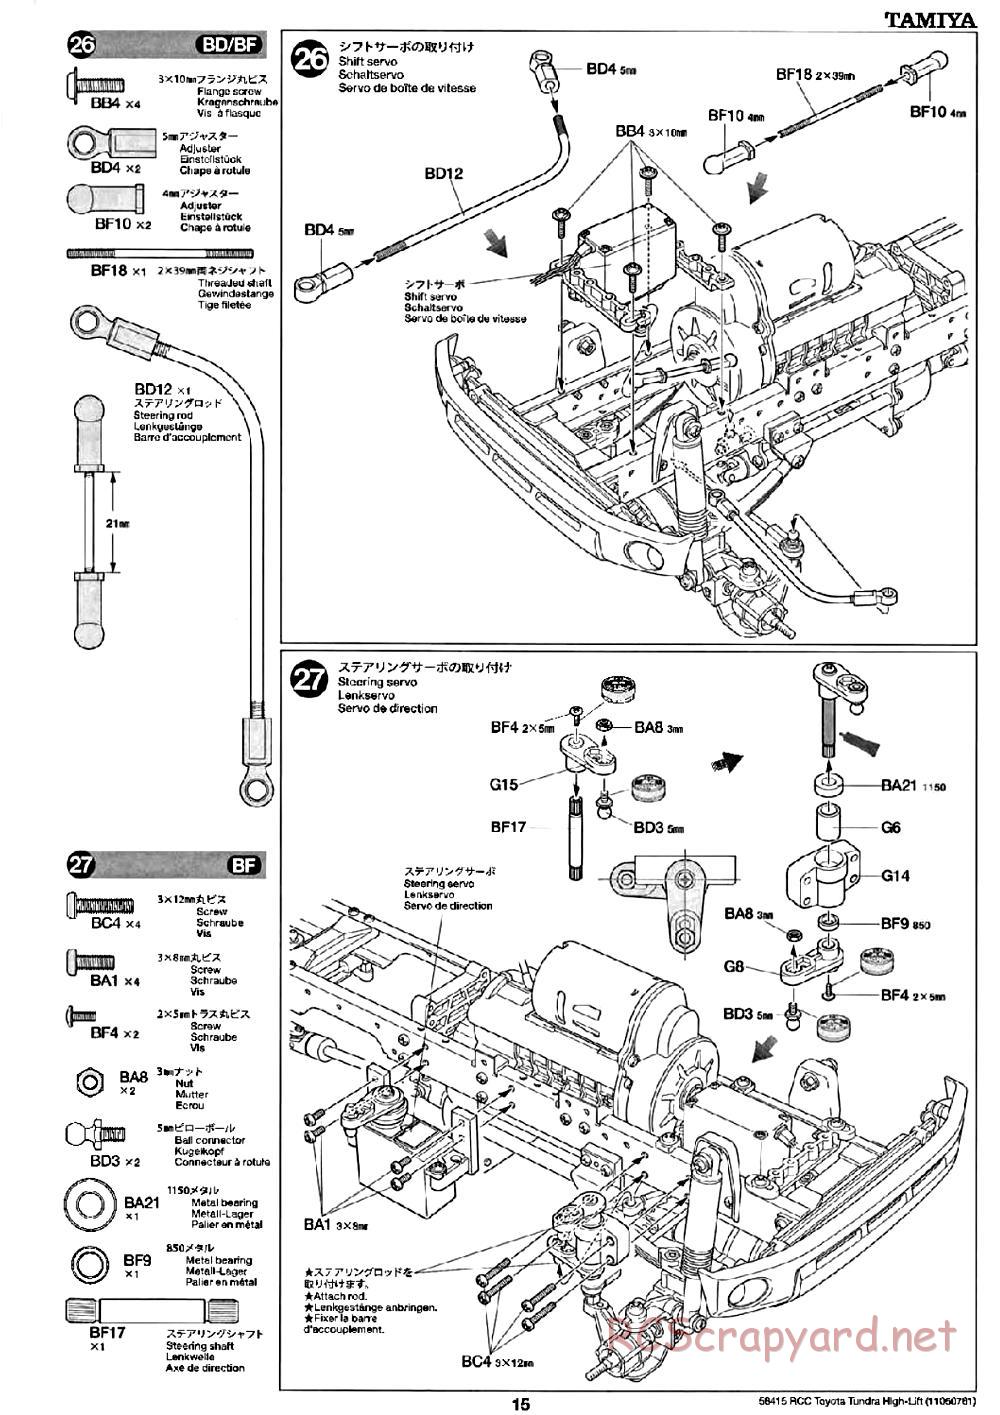 Tamiya - Toyota Tundra High-Lift Chassis - Manual - Page 15